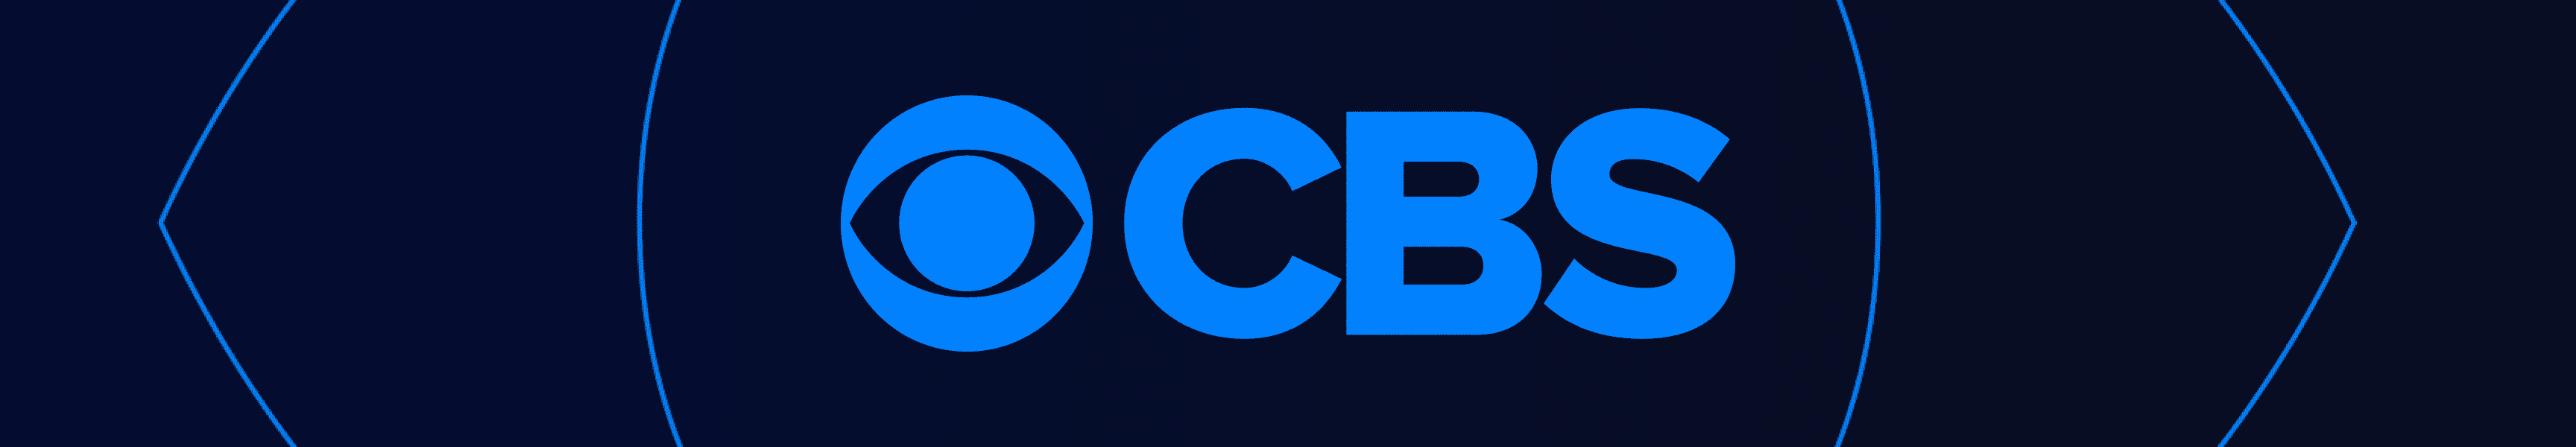 CBS Entertainment Kitchen Supplies